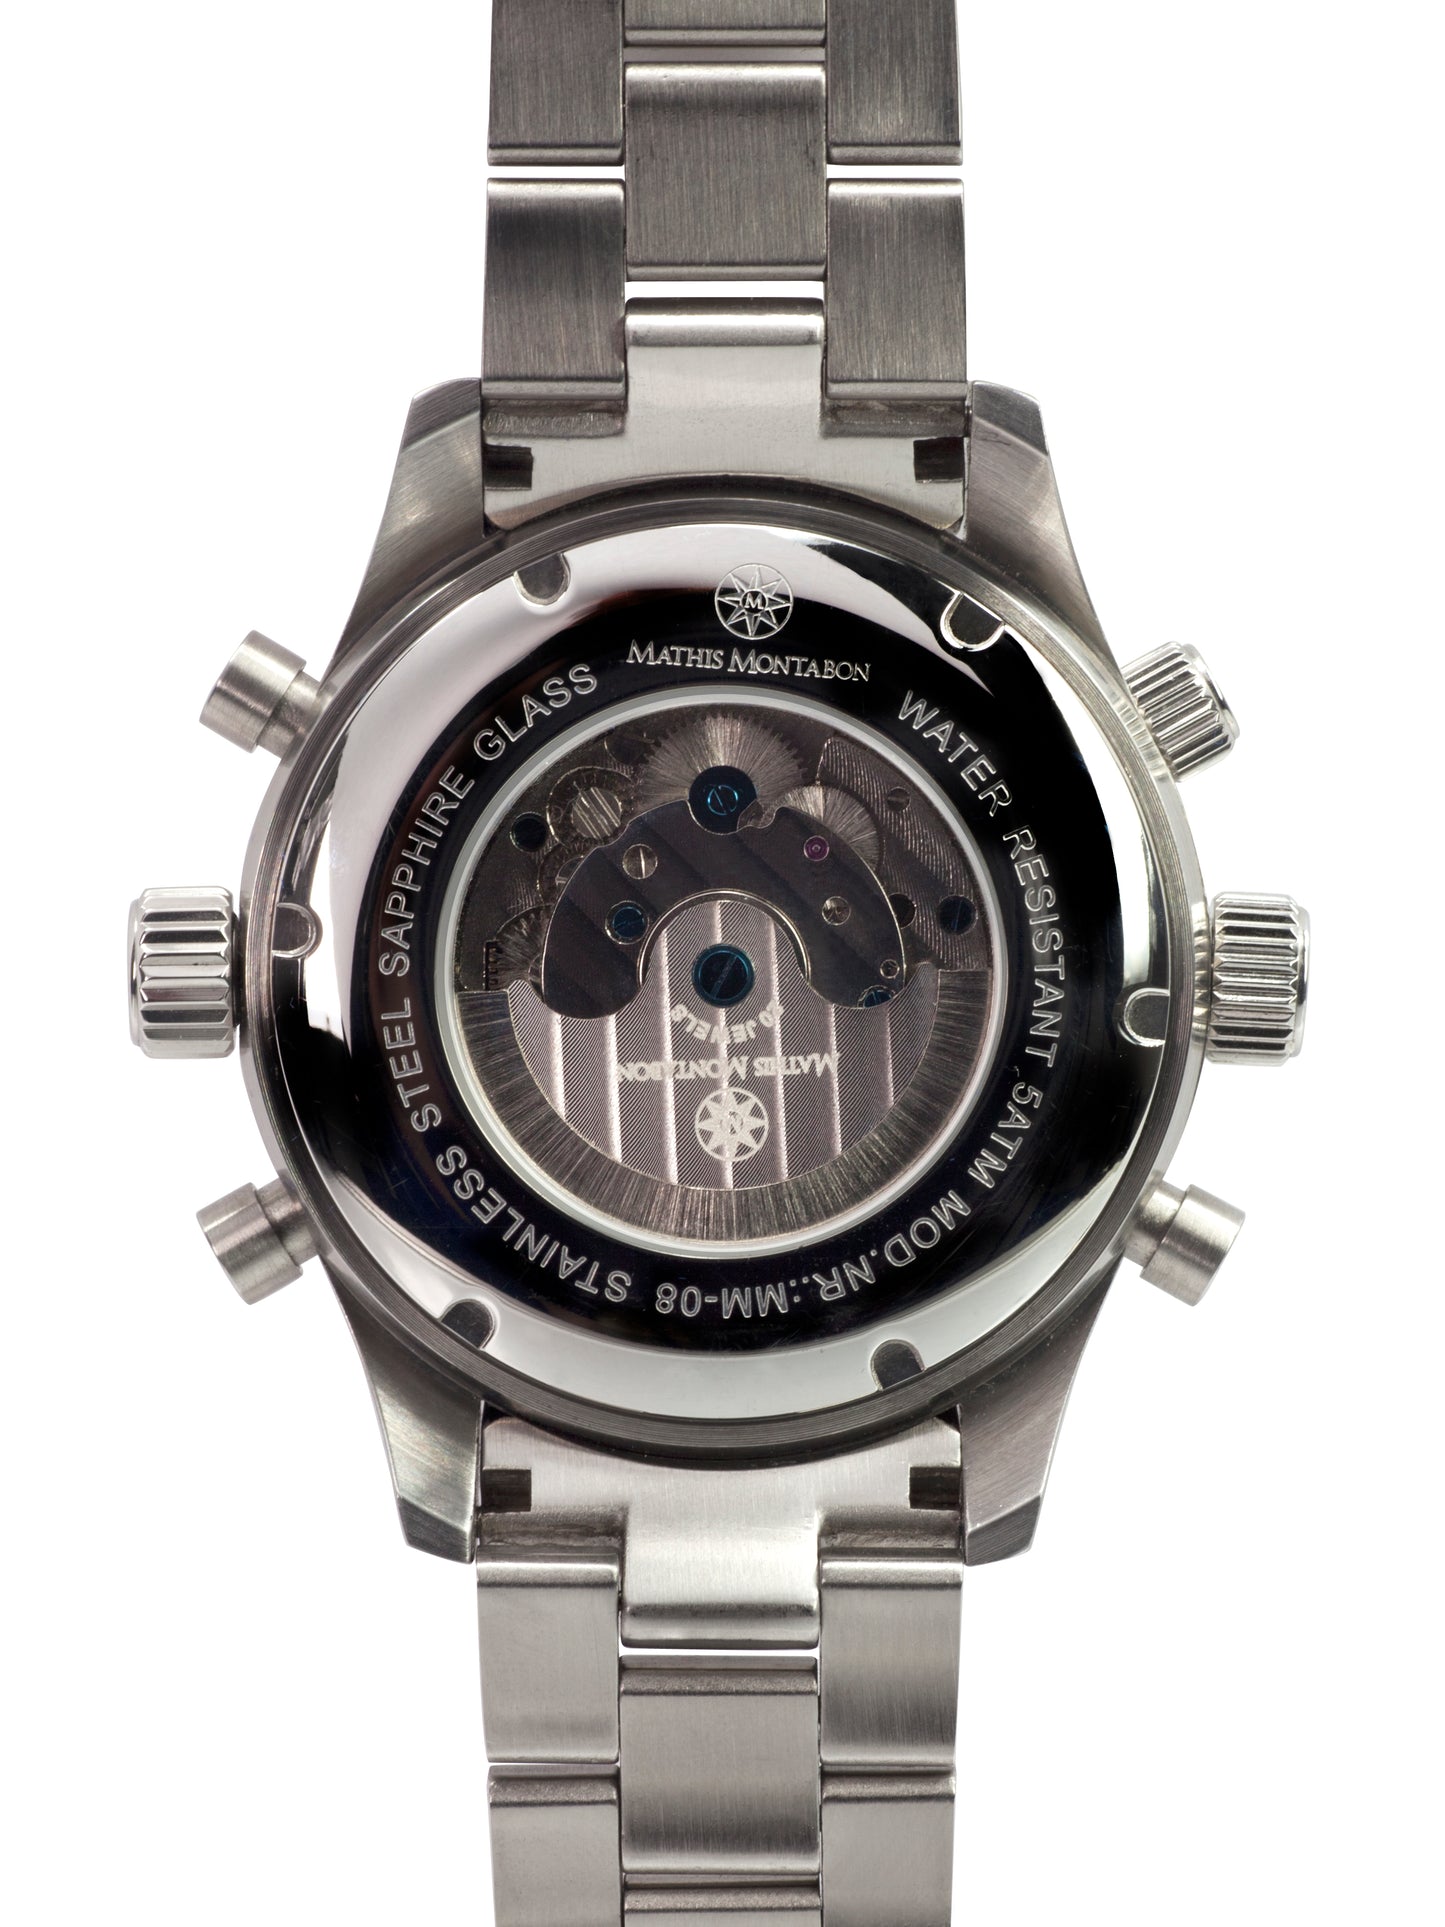 Automatic watches — Globe Trotter — Mathis Montabon — schwarz